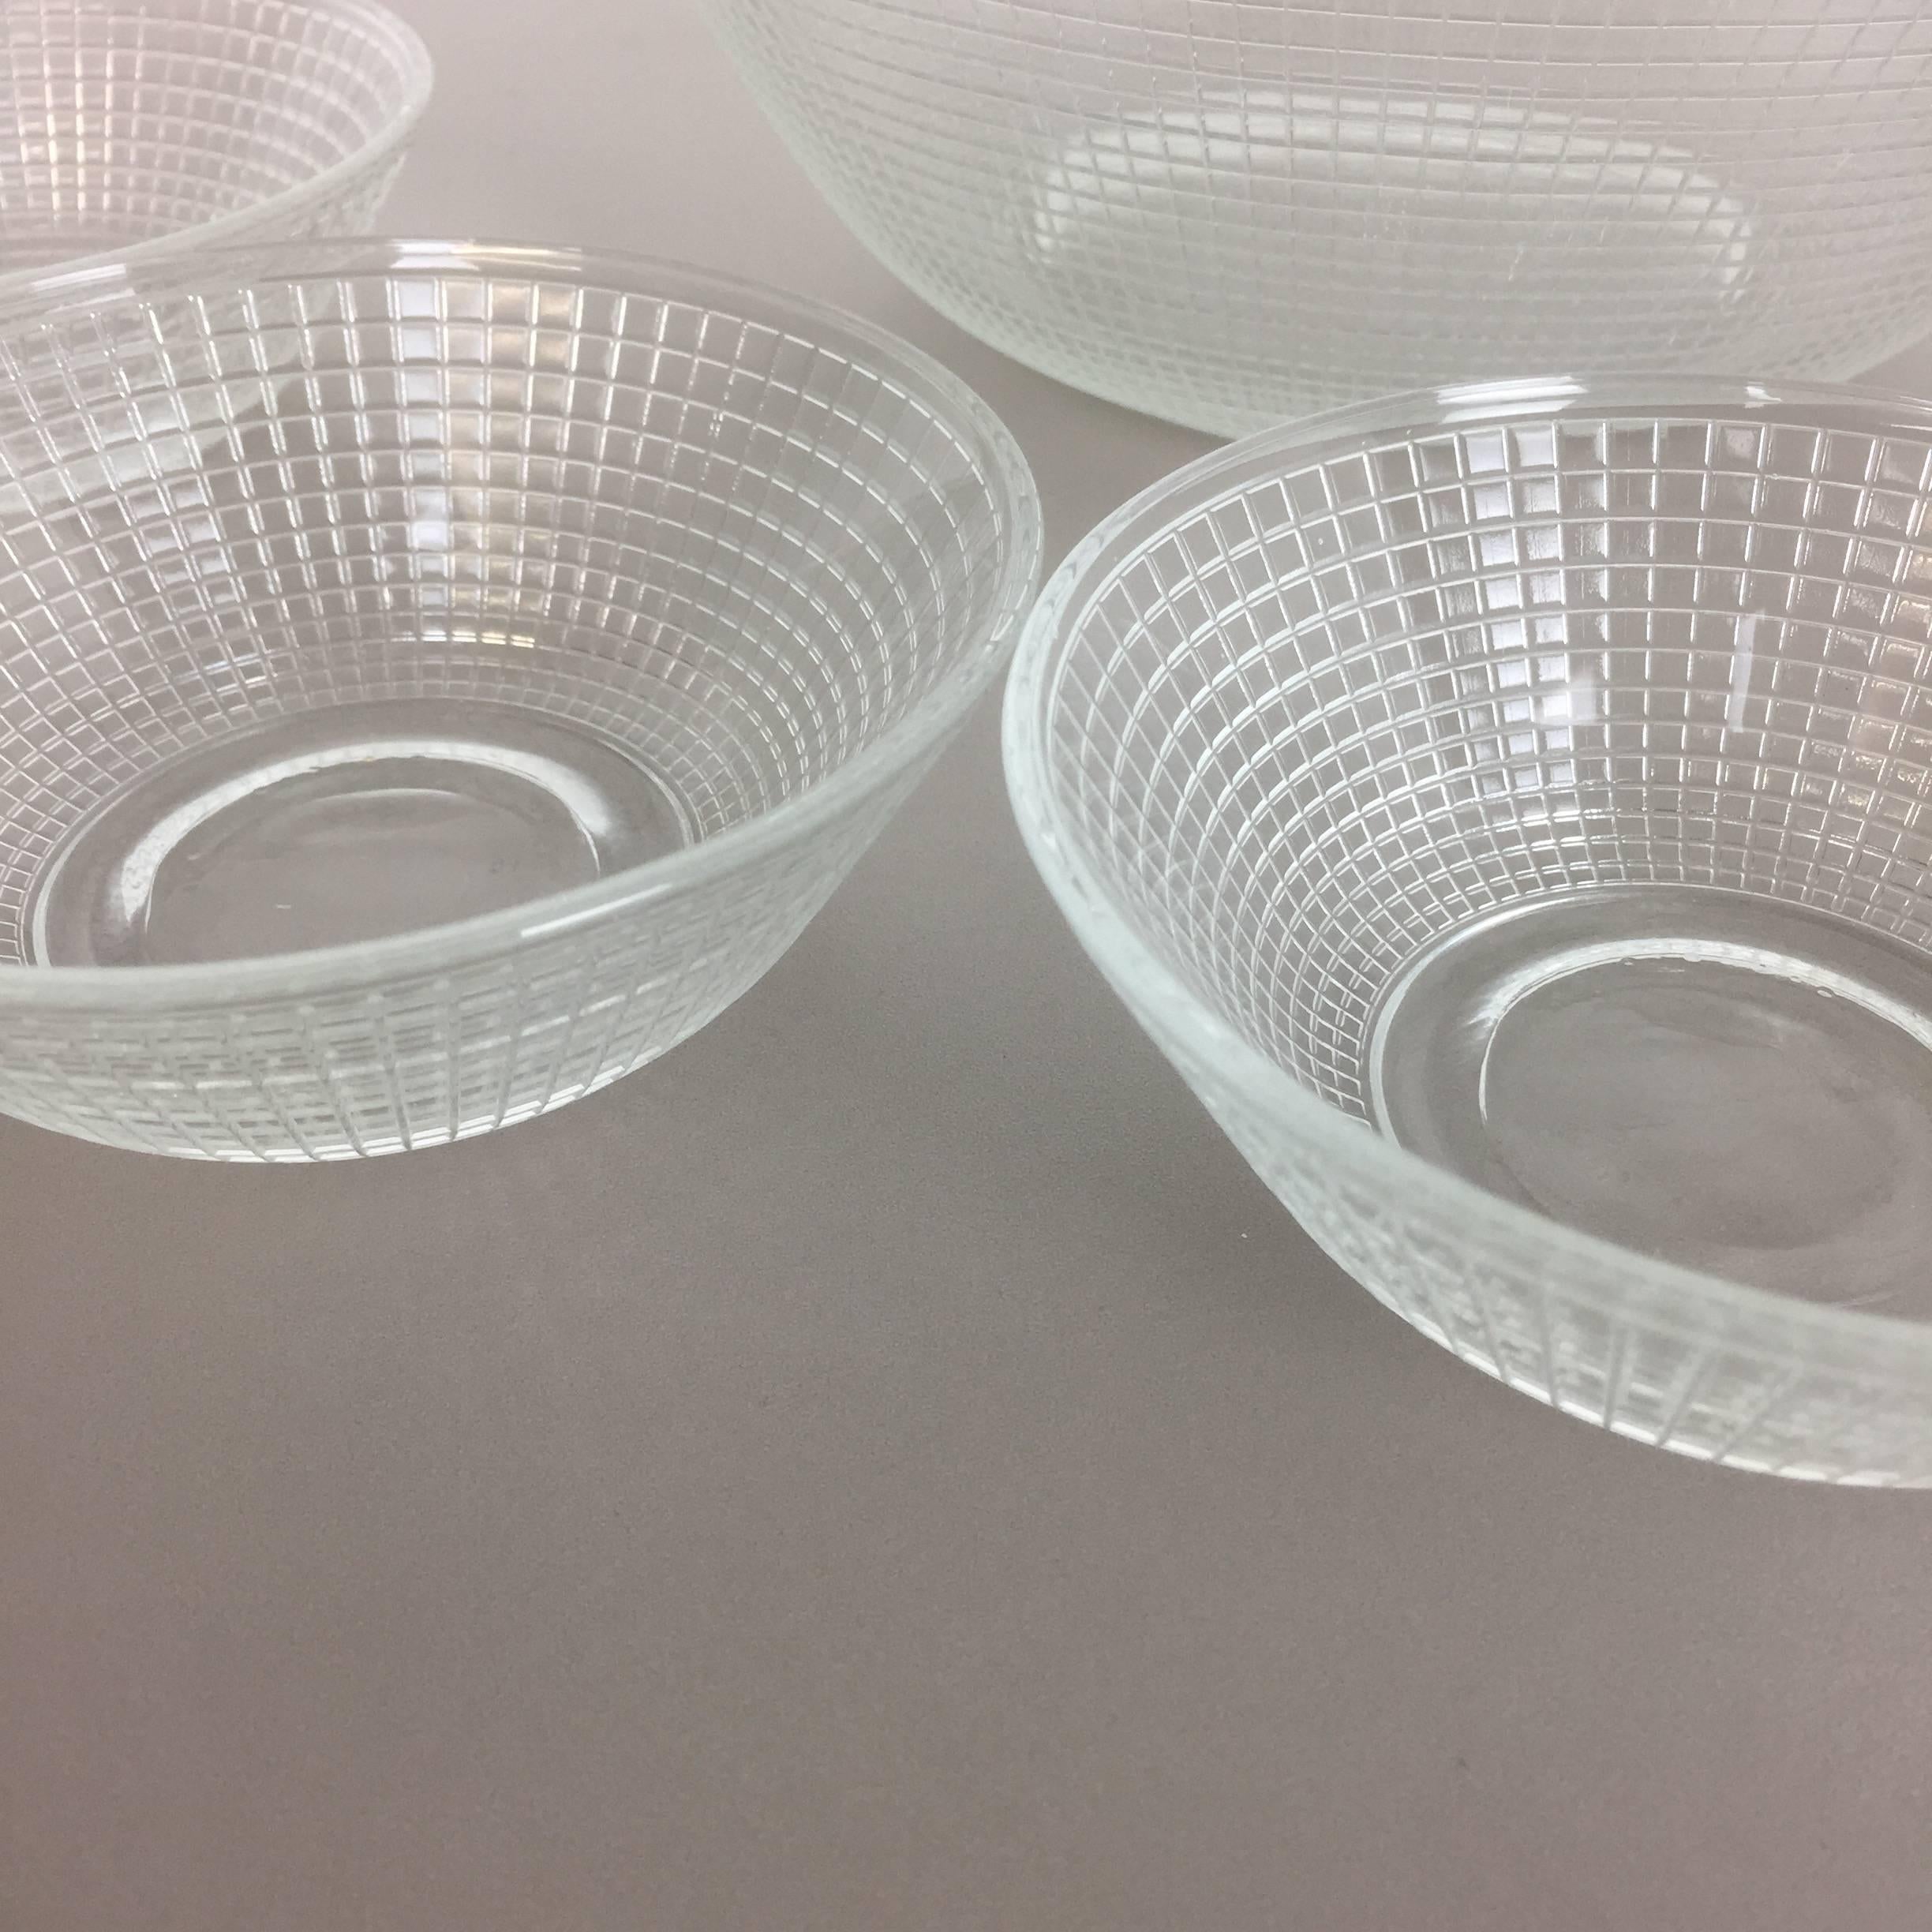 Set of 7 glass shells by Wilhelm Wagenfeld for VLG Weisswasser, Germany 1960s (Bauhaus)